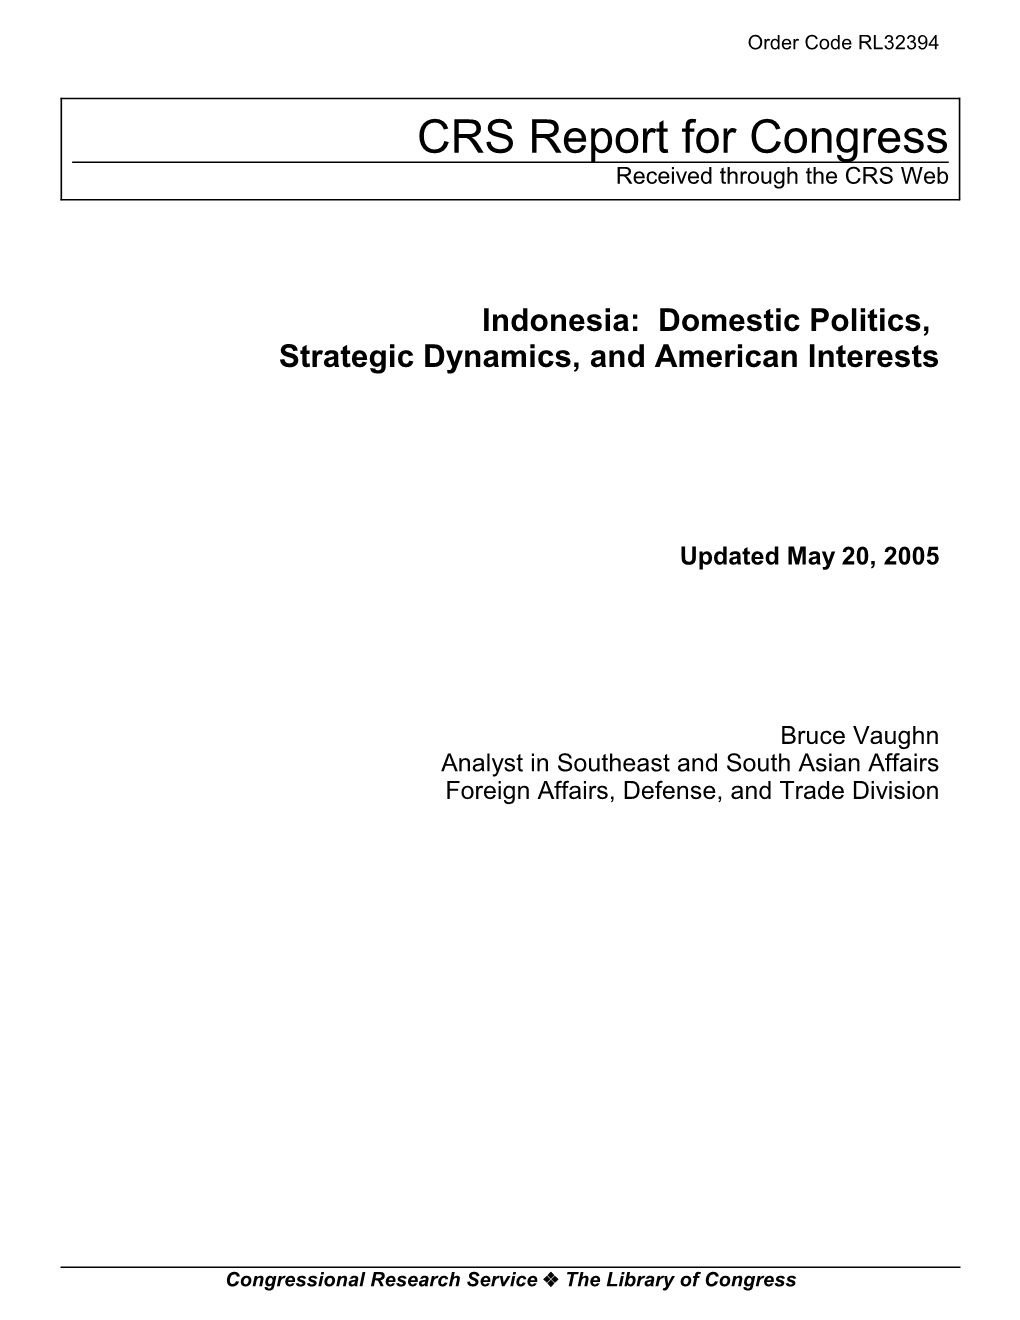 Indonesia: Domestic Politics, Strategic Dynamics, and American Interests